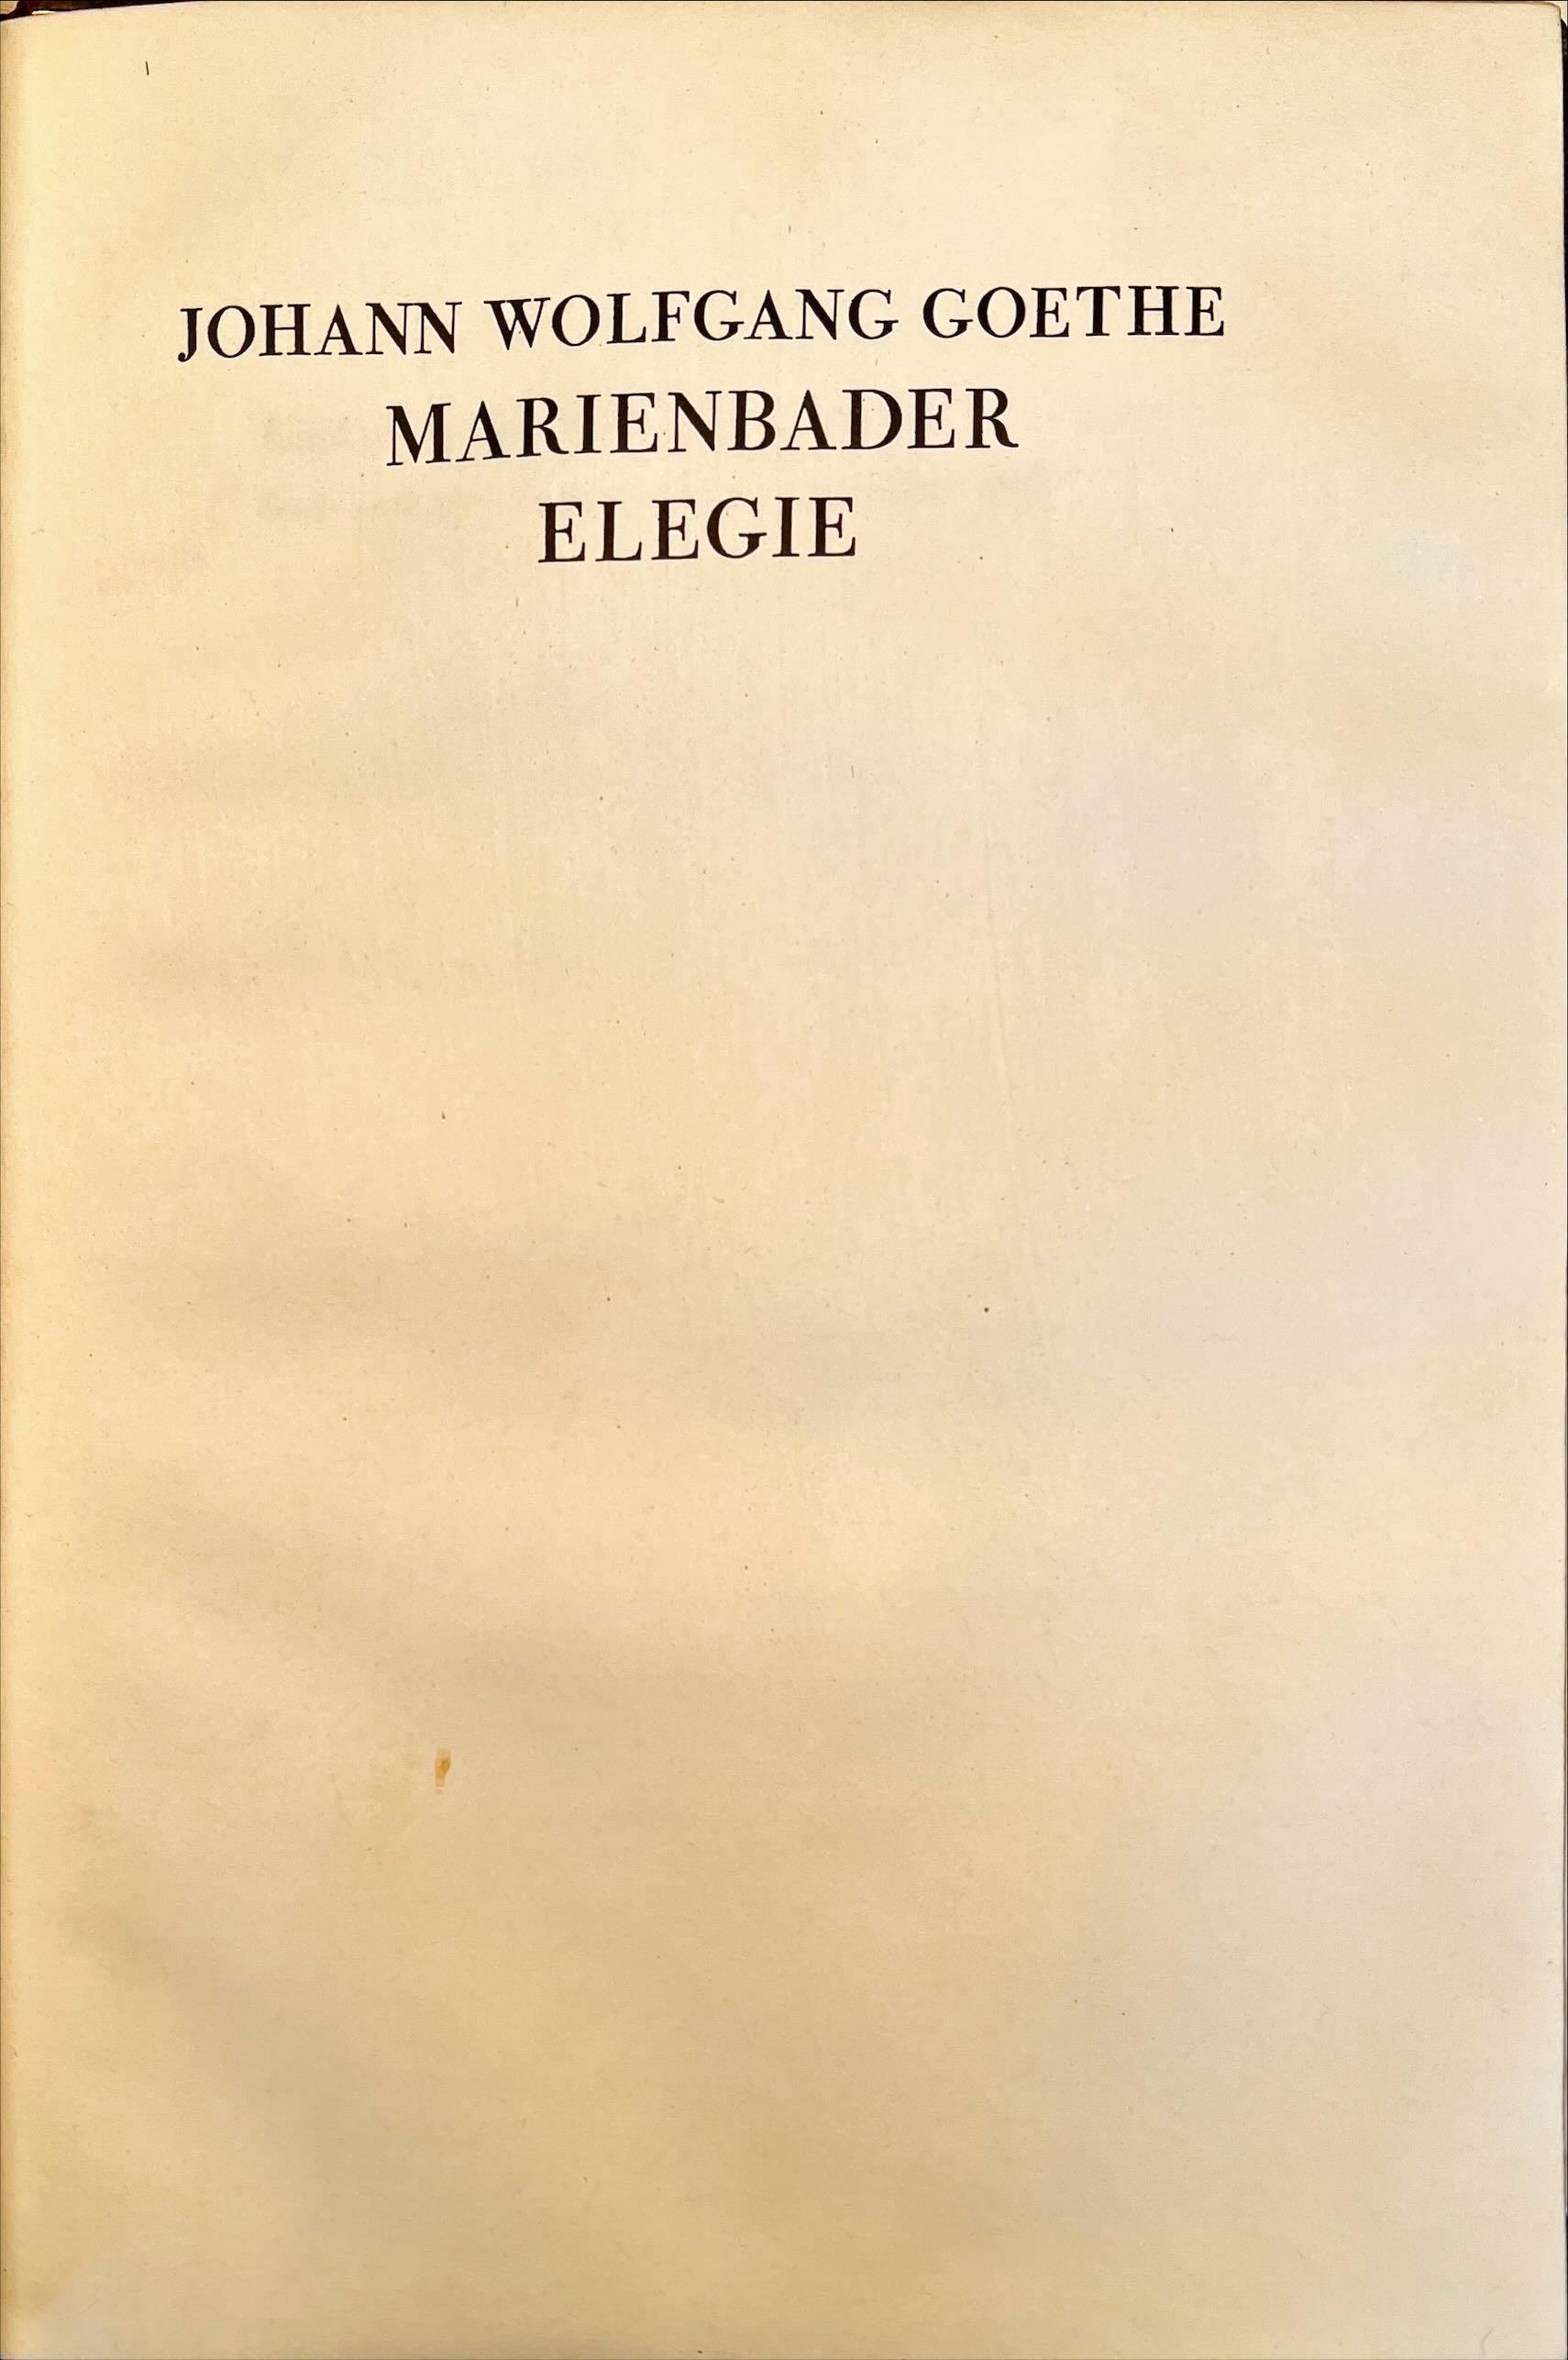 Marienbader Elegie, Goethe. Bodoni Press